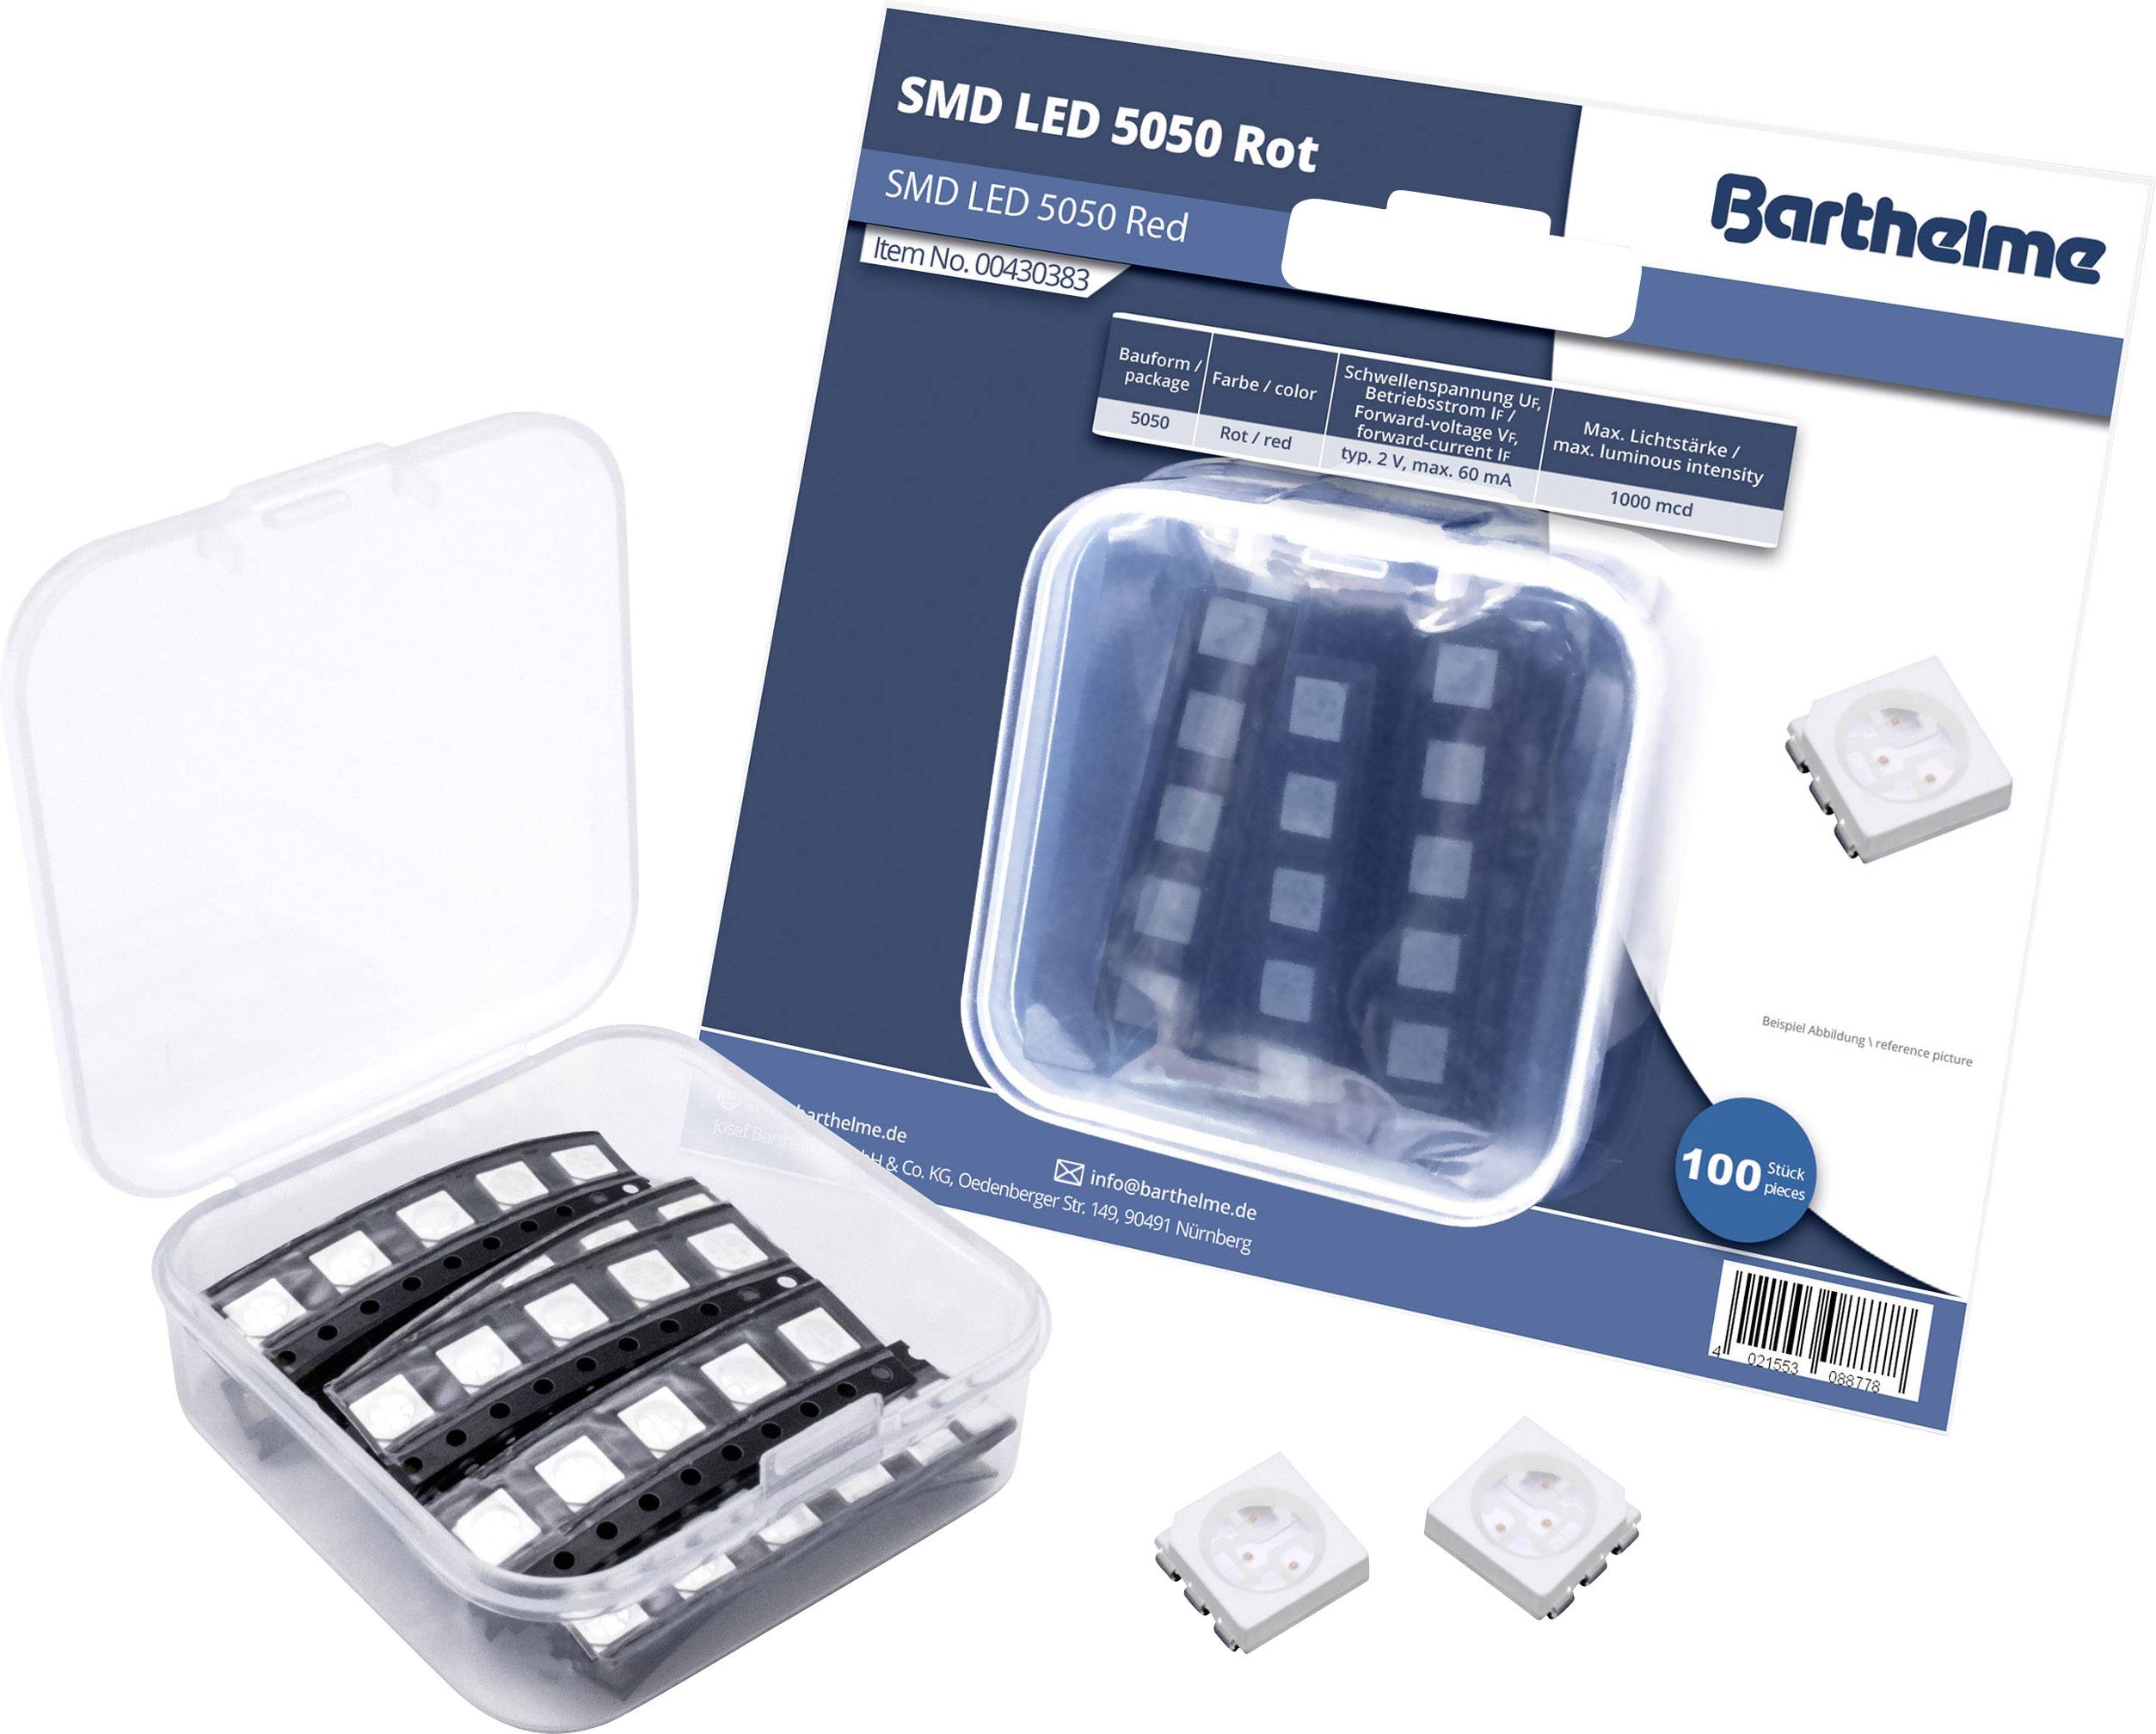 BARTHELME SMD-LED 5050 Rot 1000 mcd 120 ° 60 mA 2 V Bulk